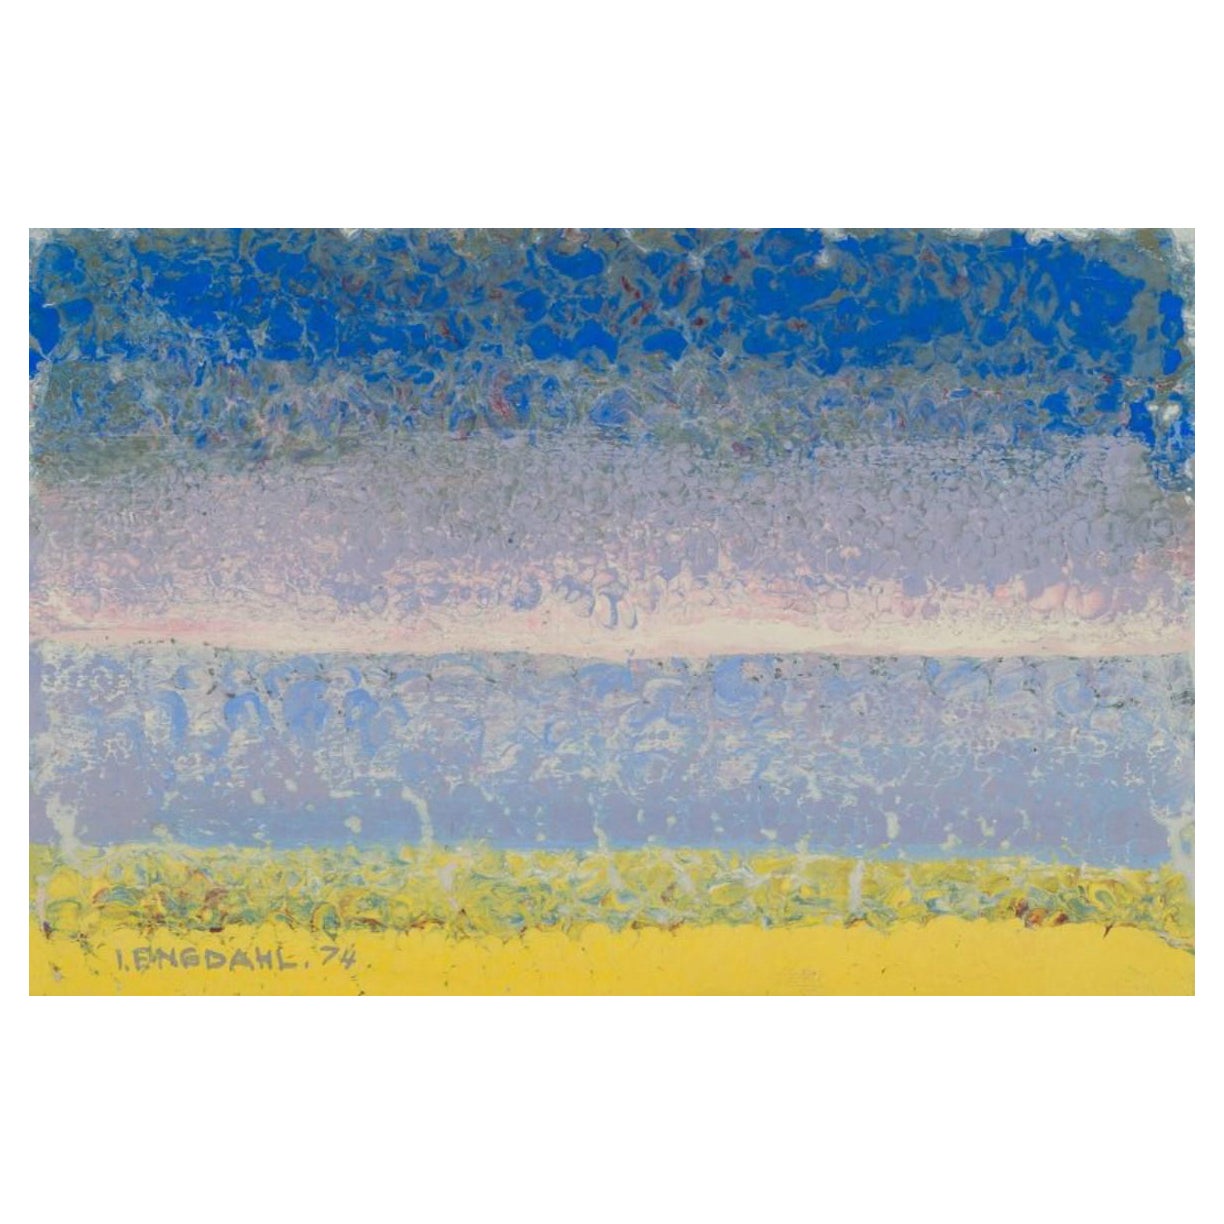 Ingvar Dahl. Oil on panel. Abstract landscape. "Soft Sea", 1974